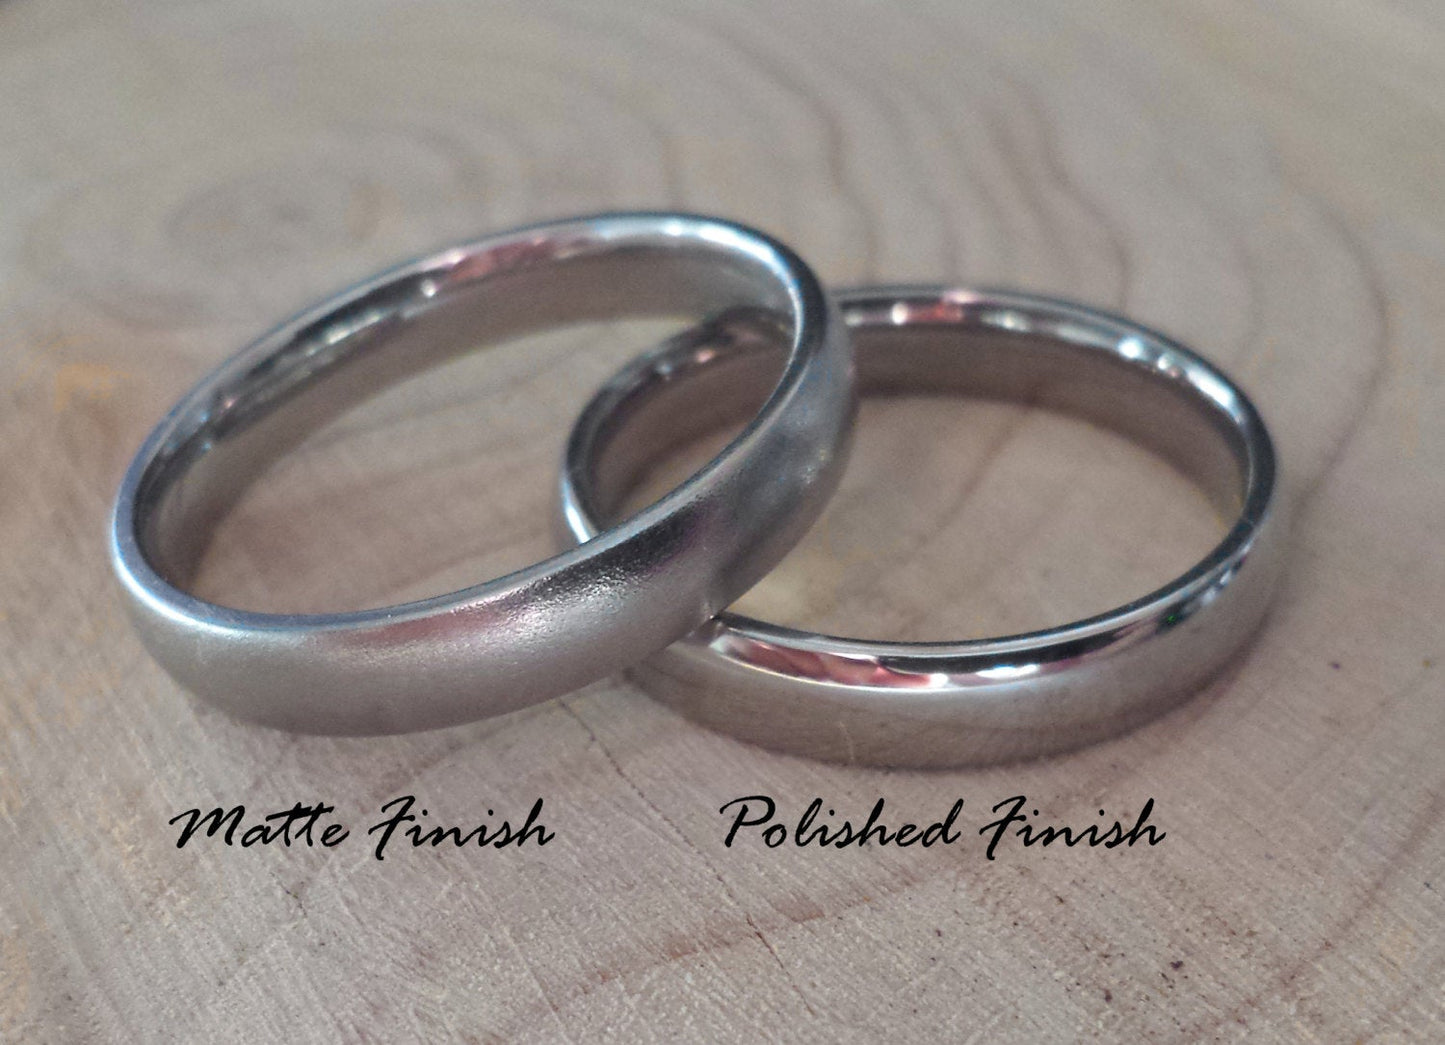 1mm Titanium Comfort Fit / Court Shape Plain band Wedding Ring - midi ring